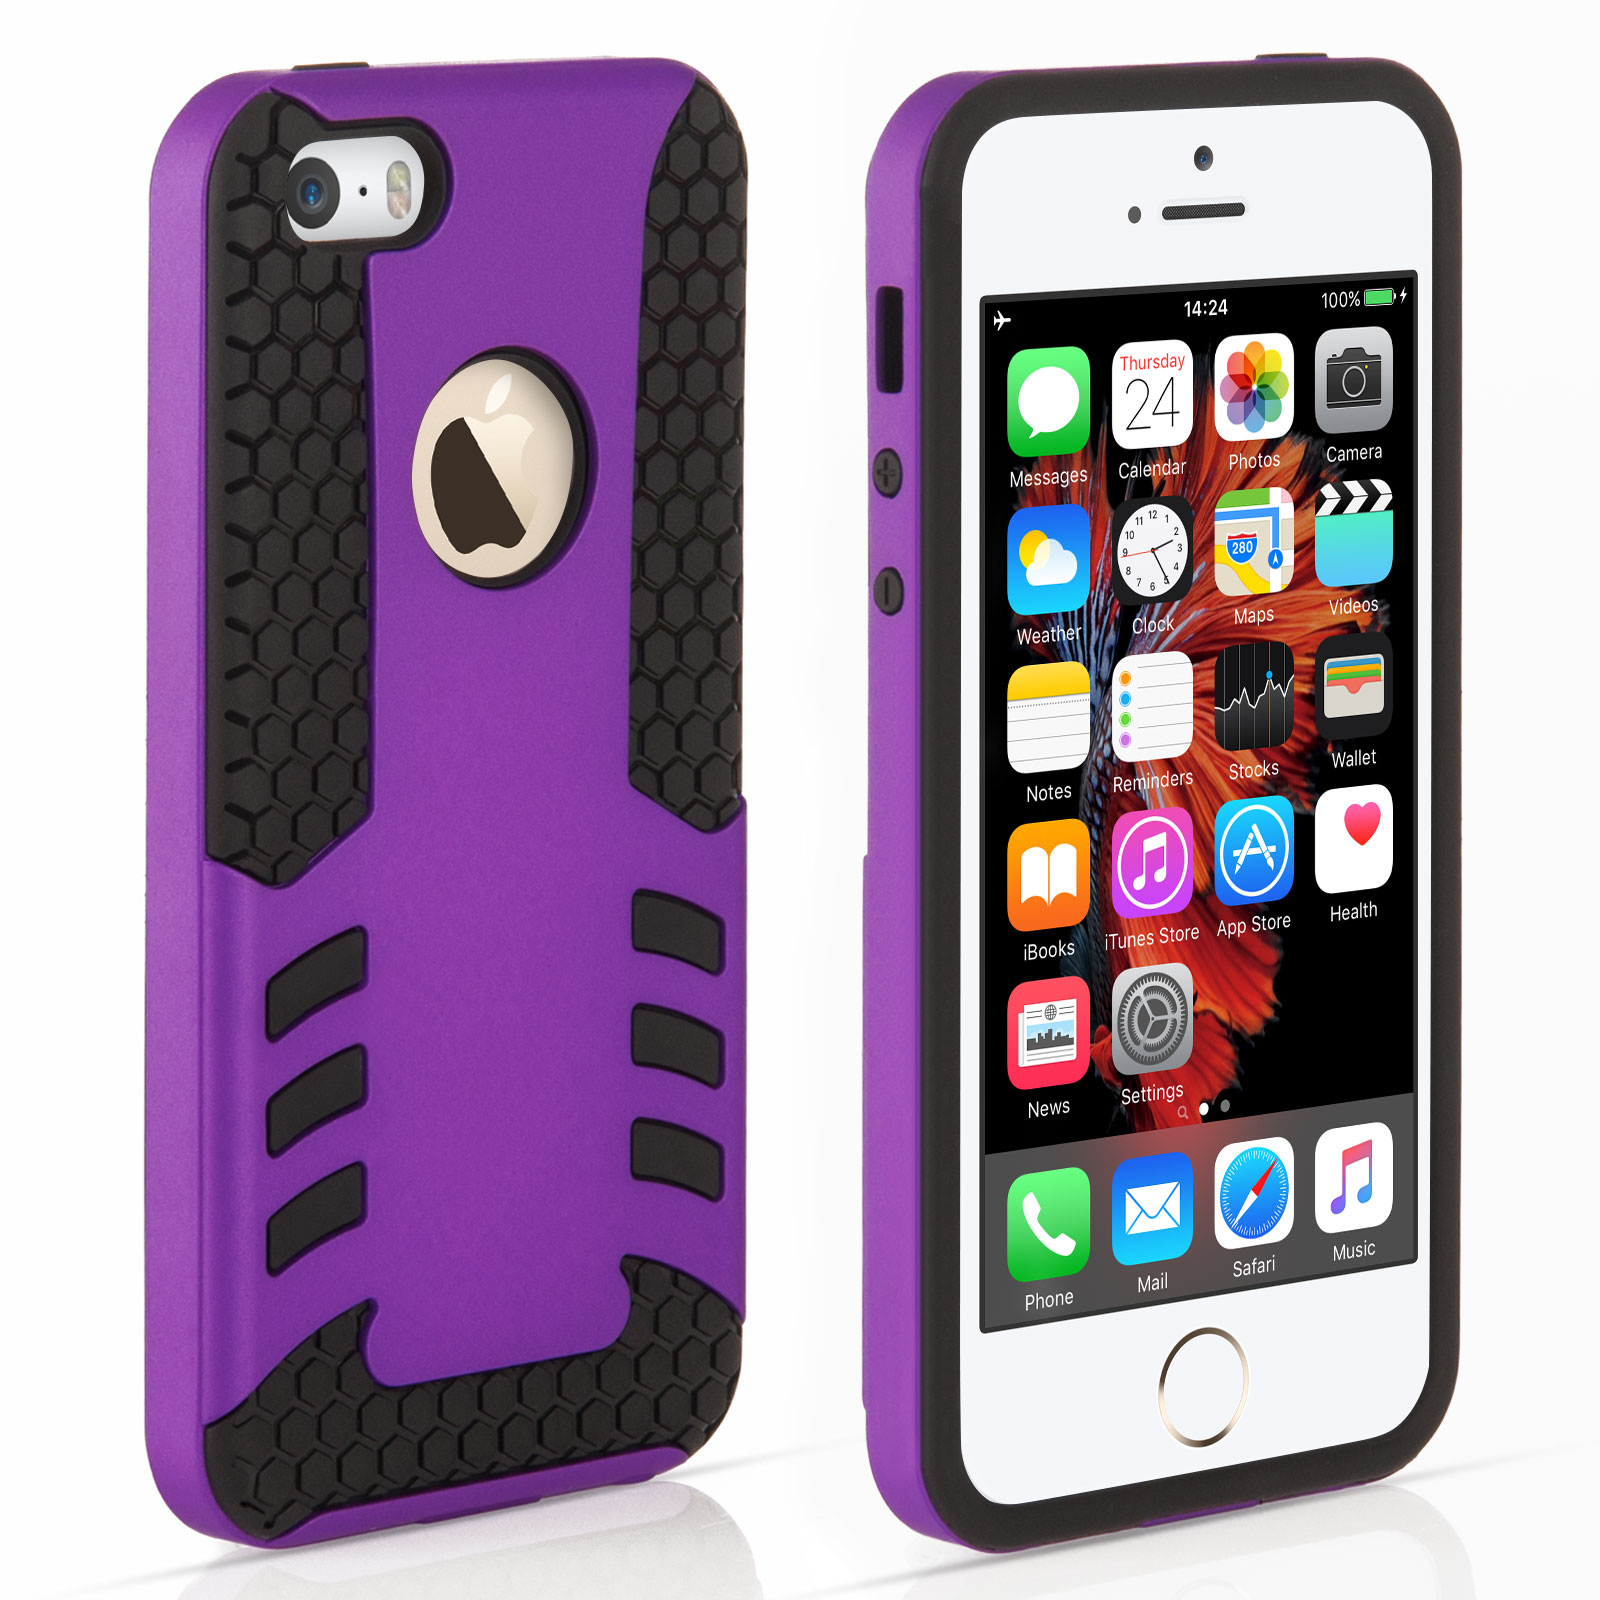 YouSave iPhone 5 / 5S / SE Border Combo Case - Purple